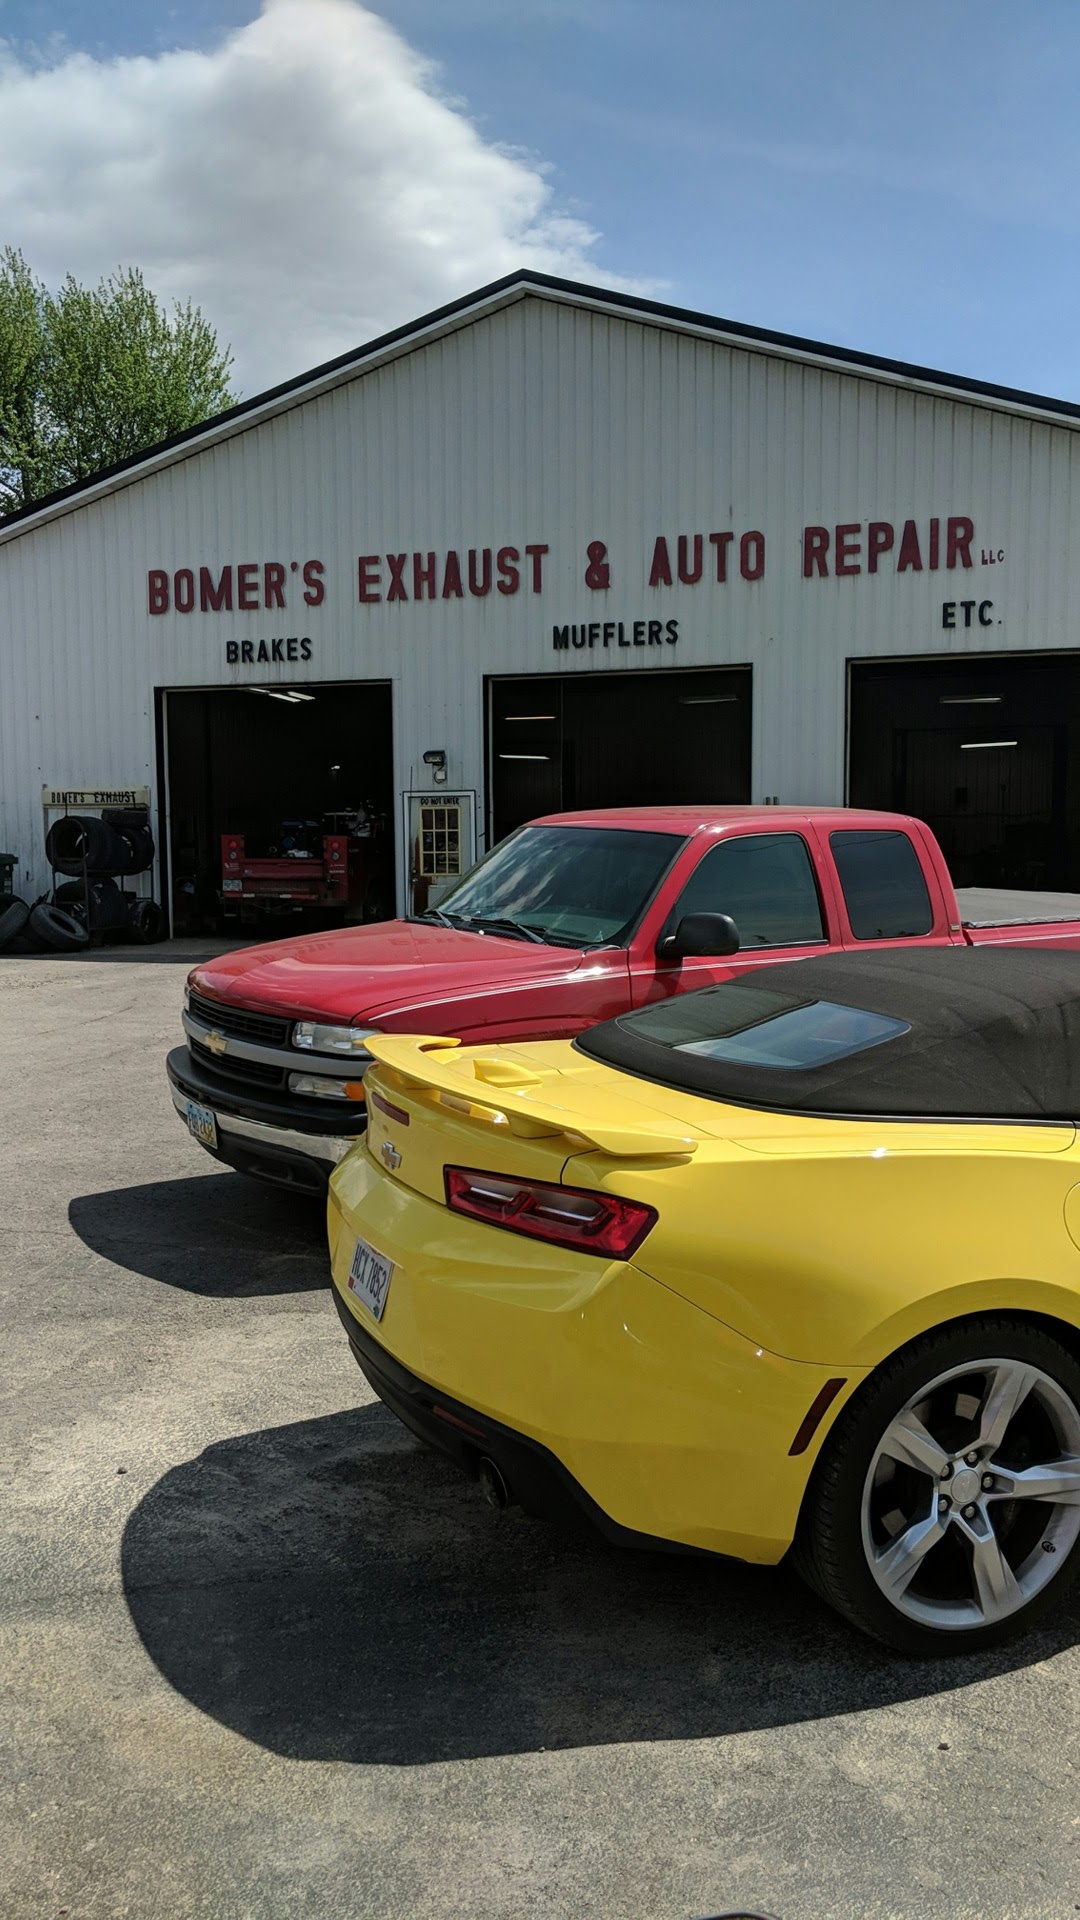 Bomer's Exhaust & Auto Repair